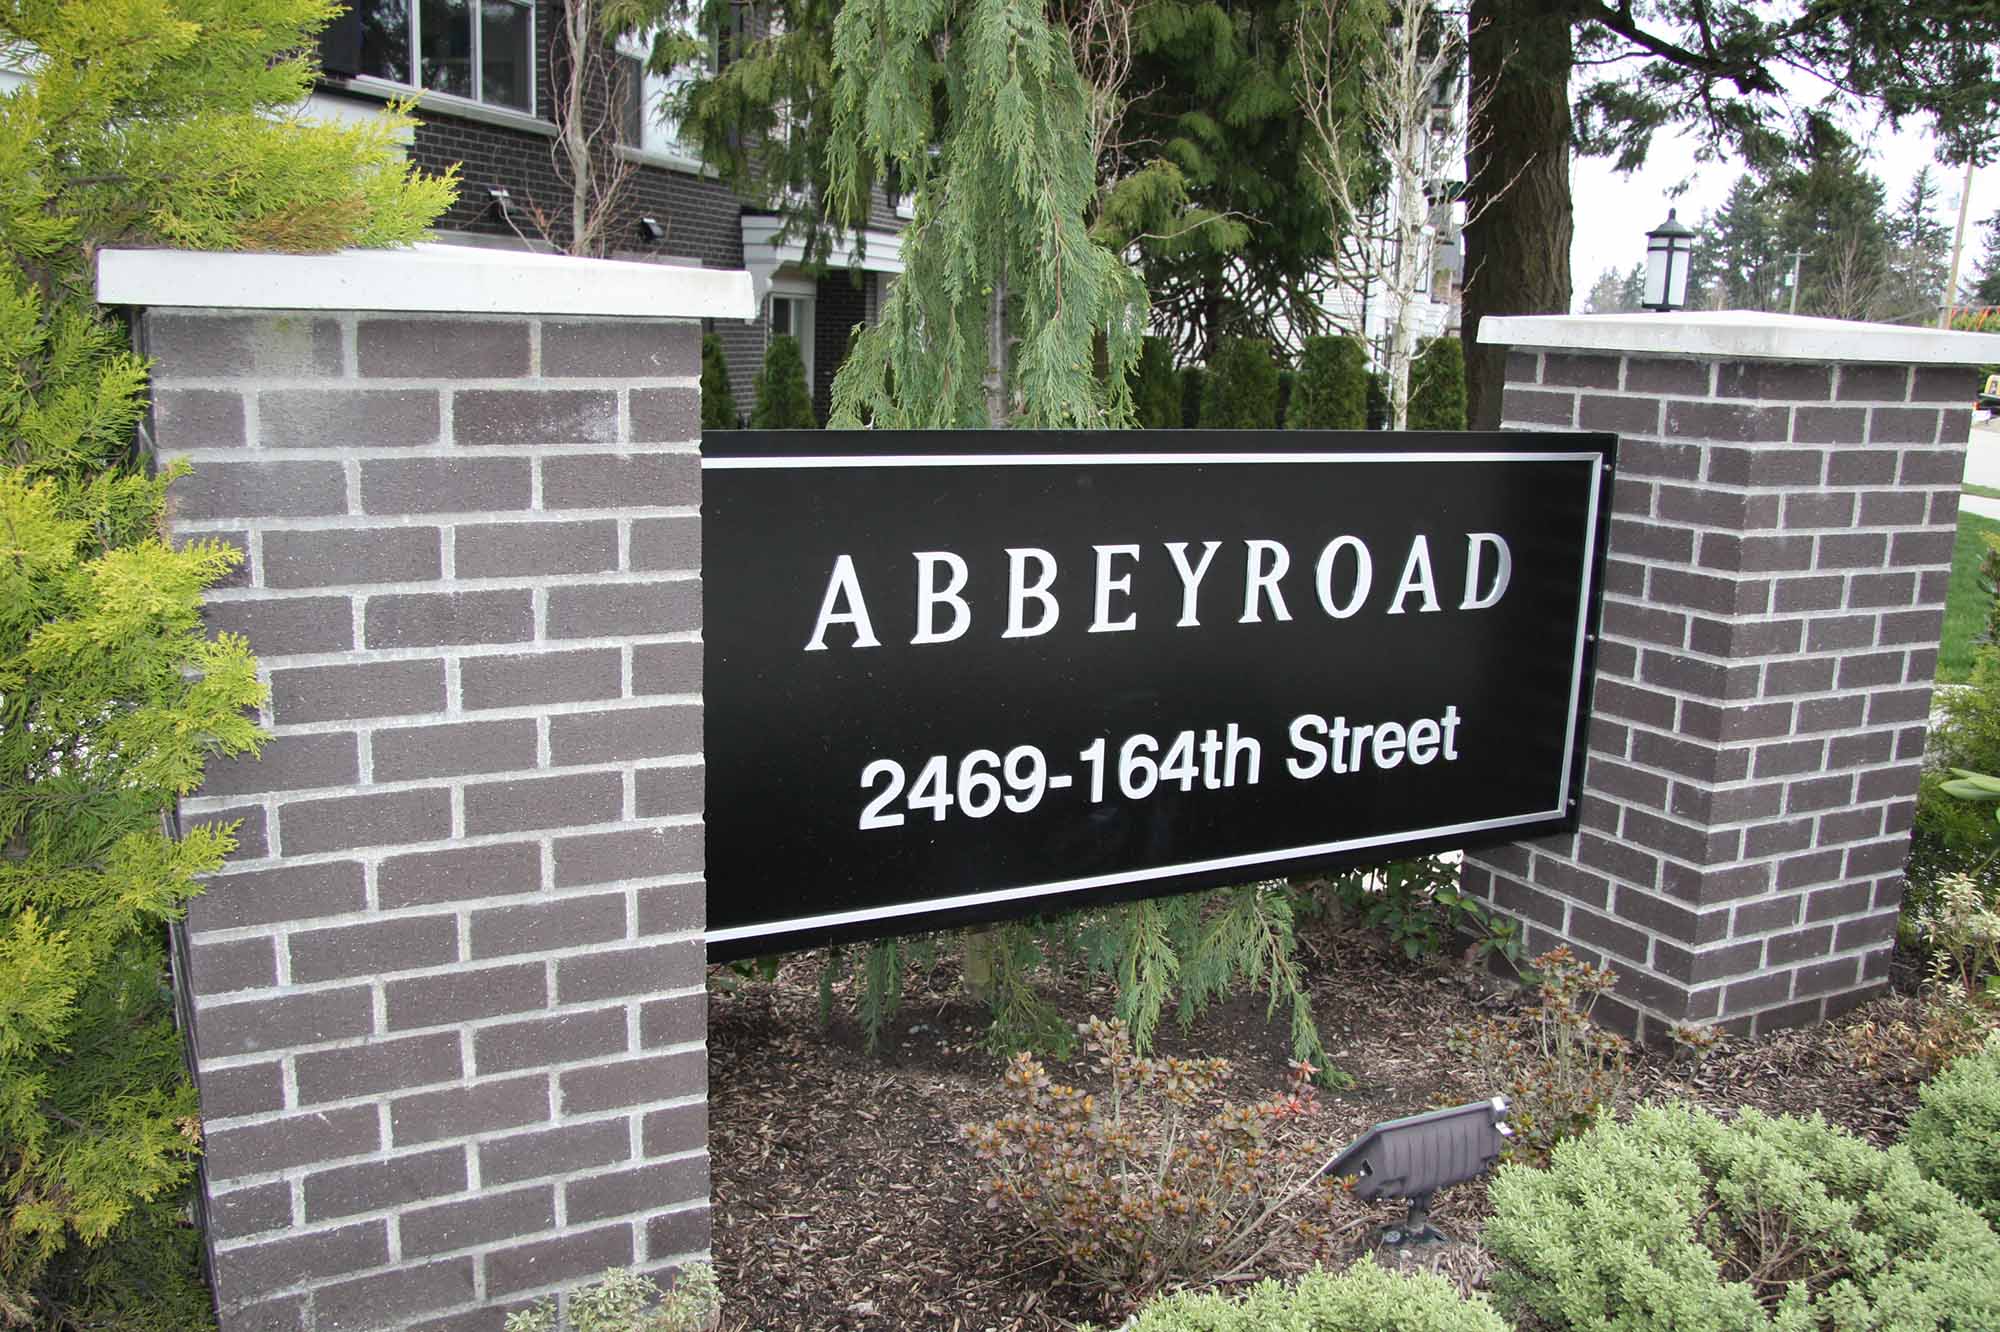 Abbeyroad aluminum sign